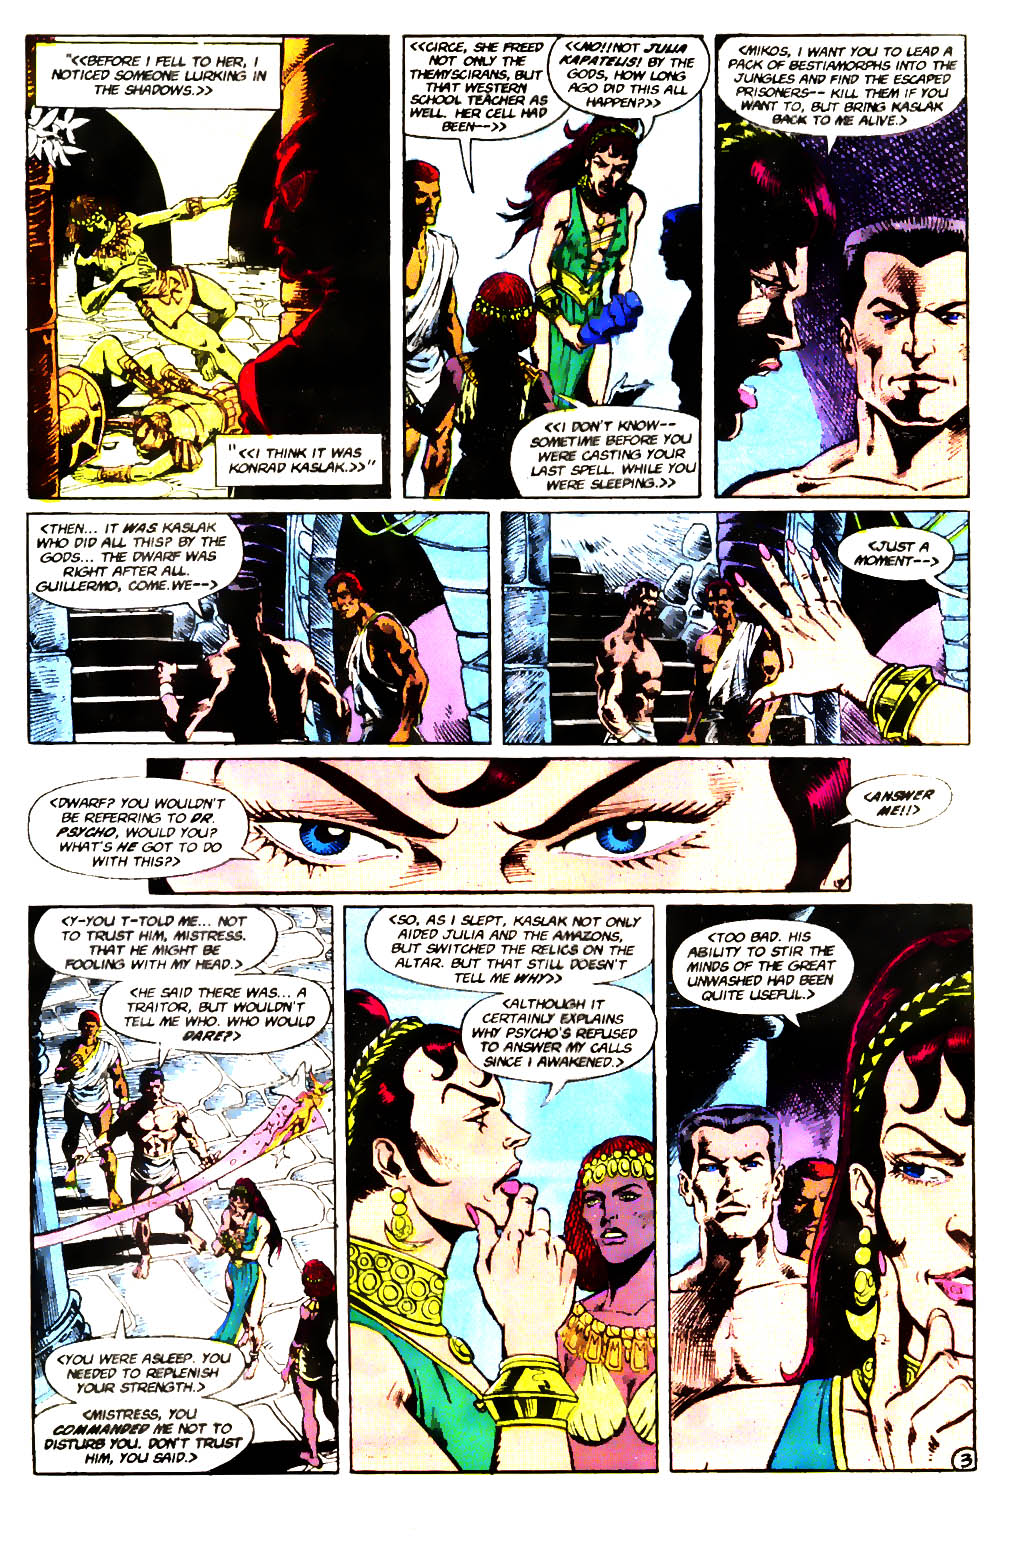 Wonder Woman (1987) 60 Page 3